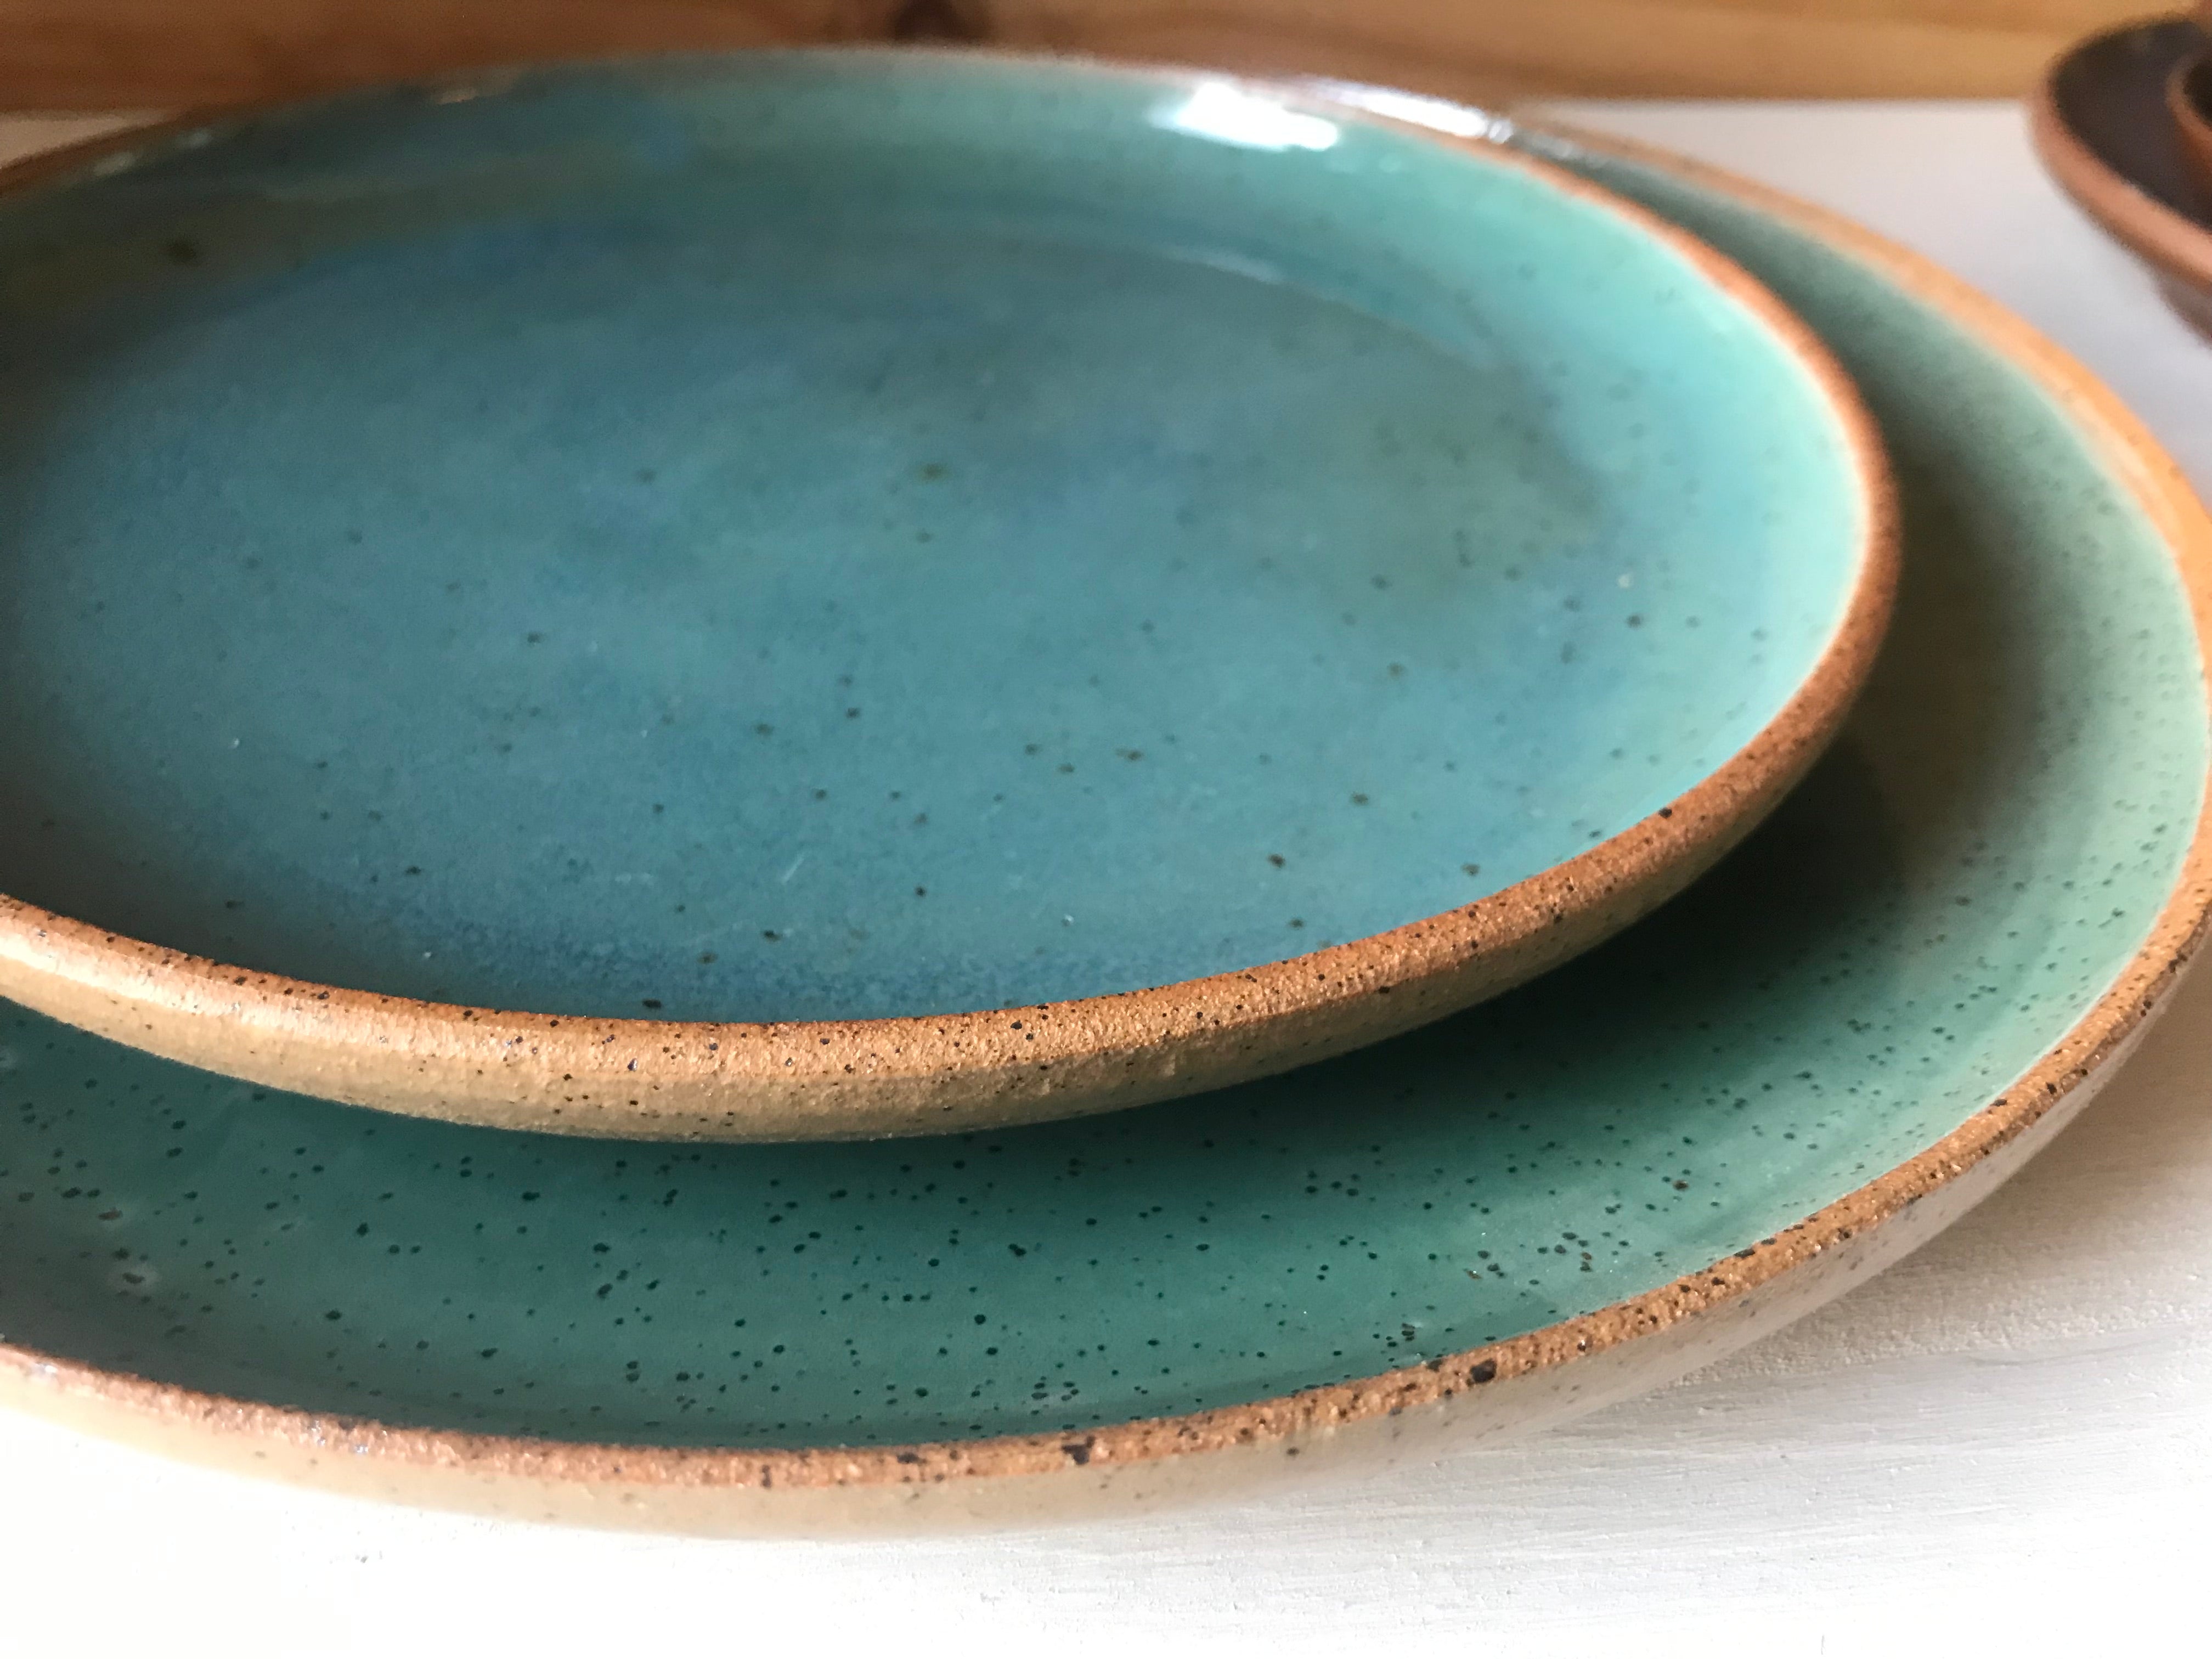 Turquoise Tableware